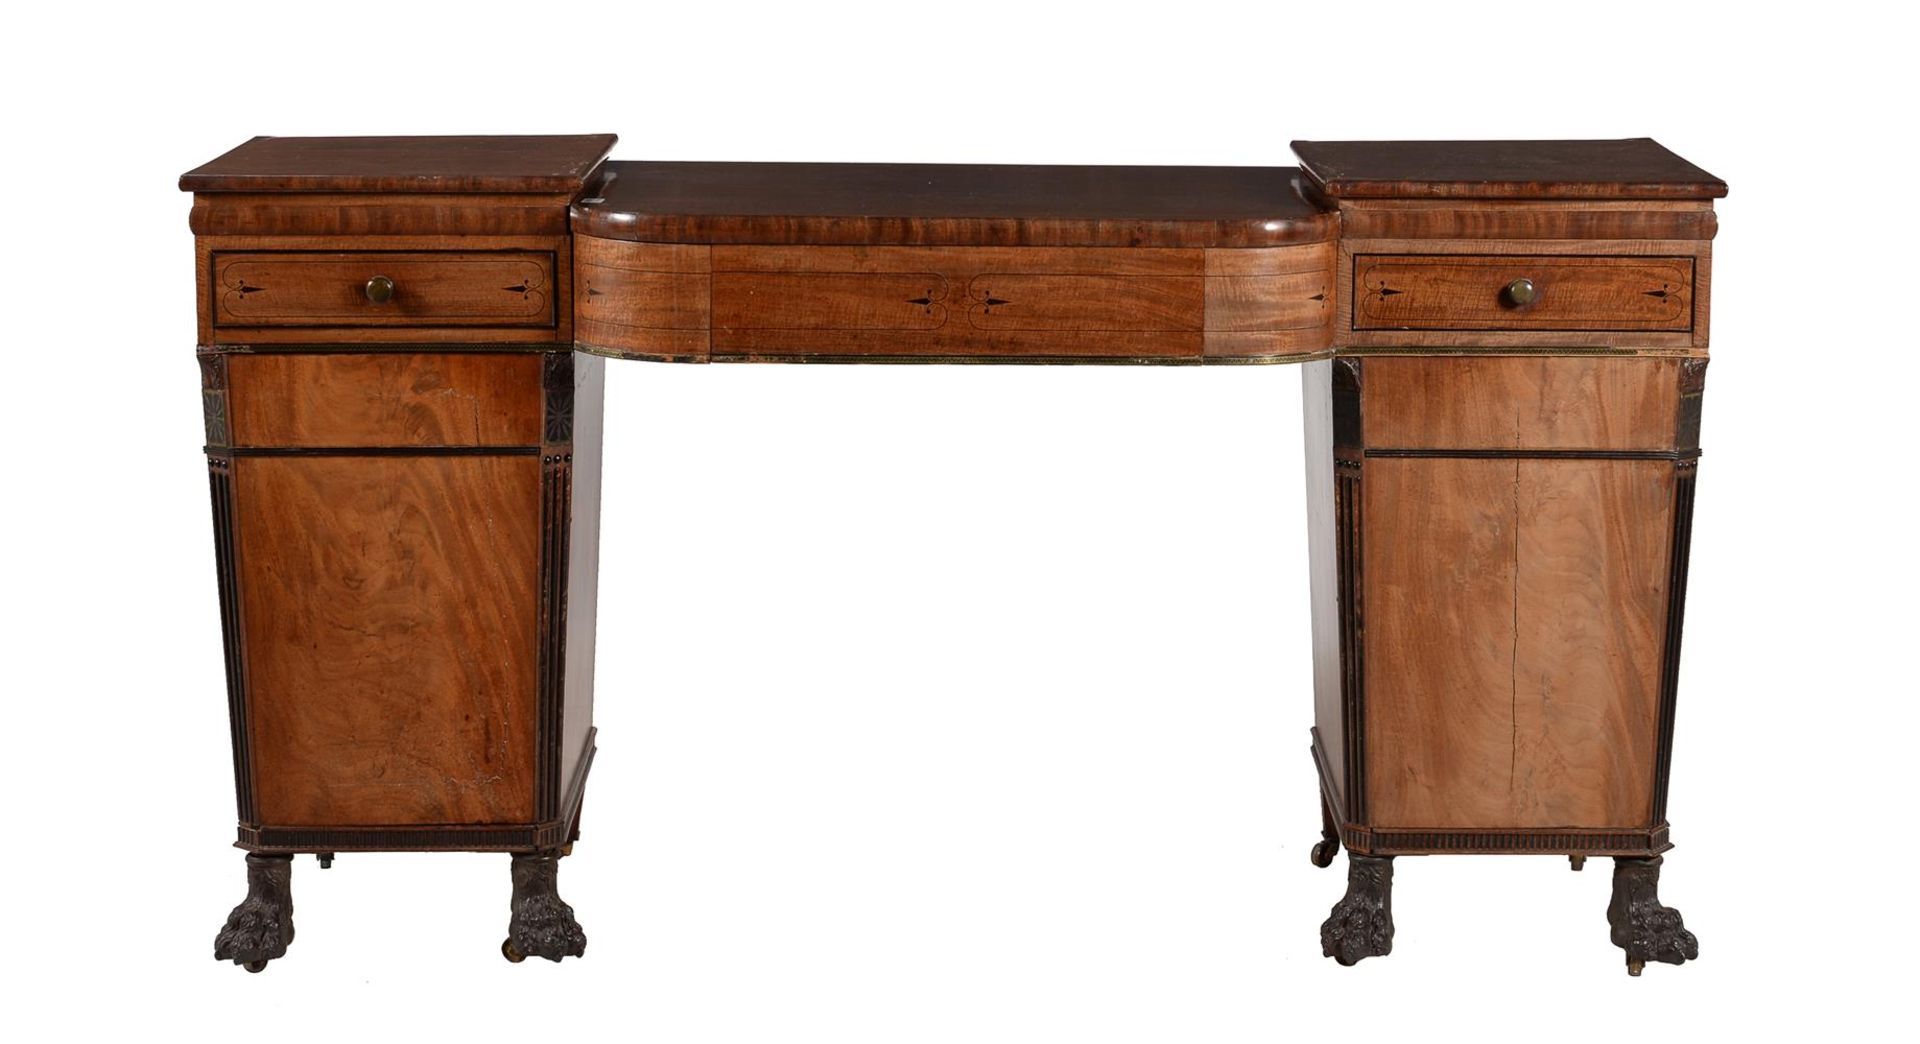 A Regency mahogany and ebonised pedestal sideboard